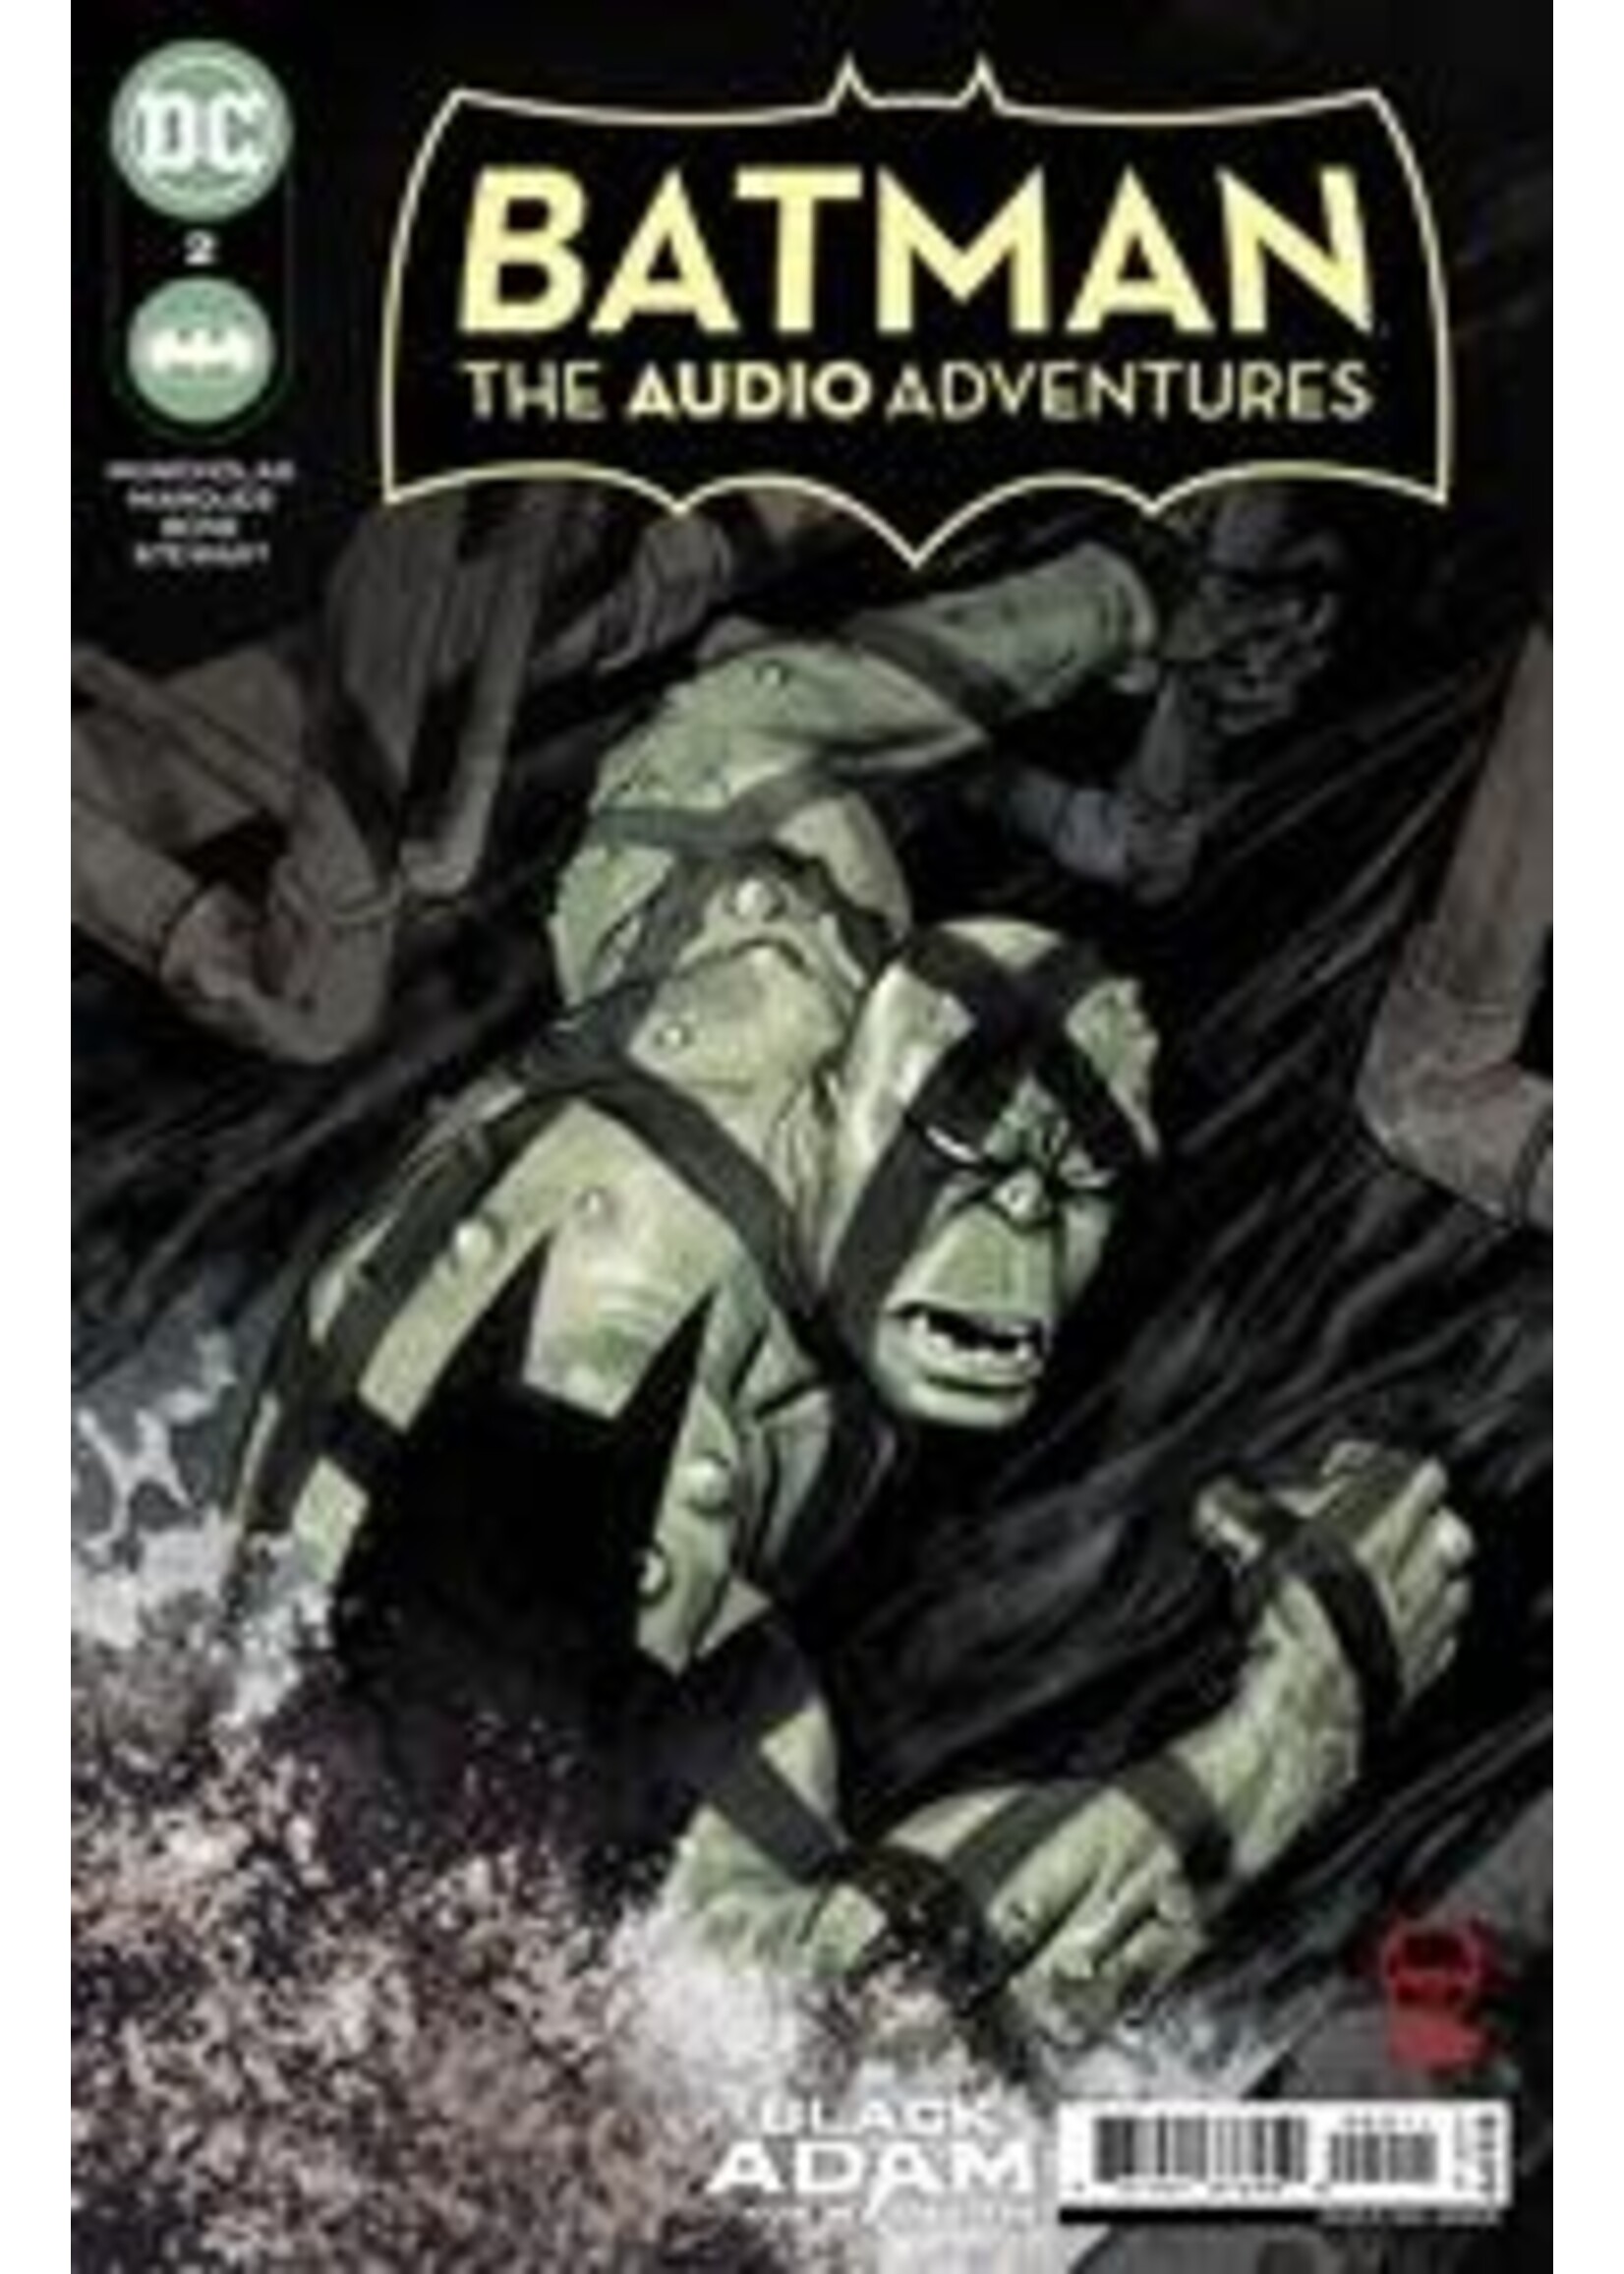 DC COMICS BATMAN THE AUDIO ADVENTURES complete 7 issue series